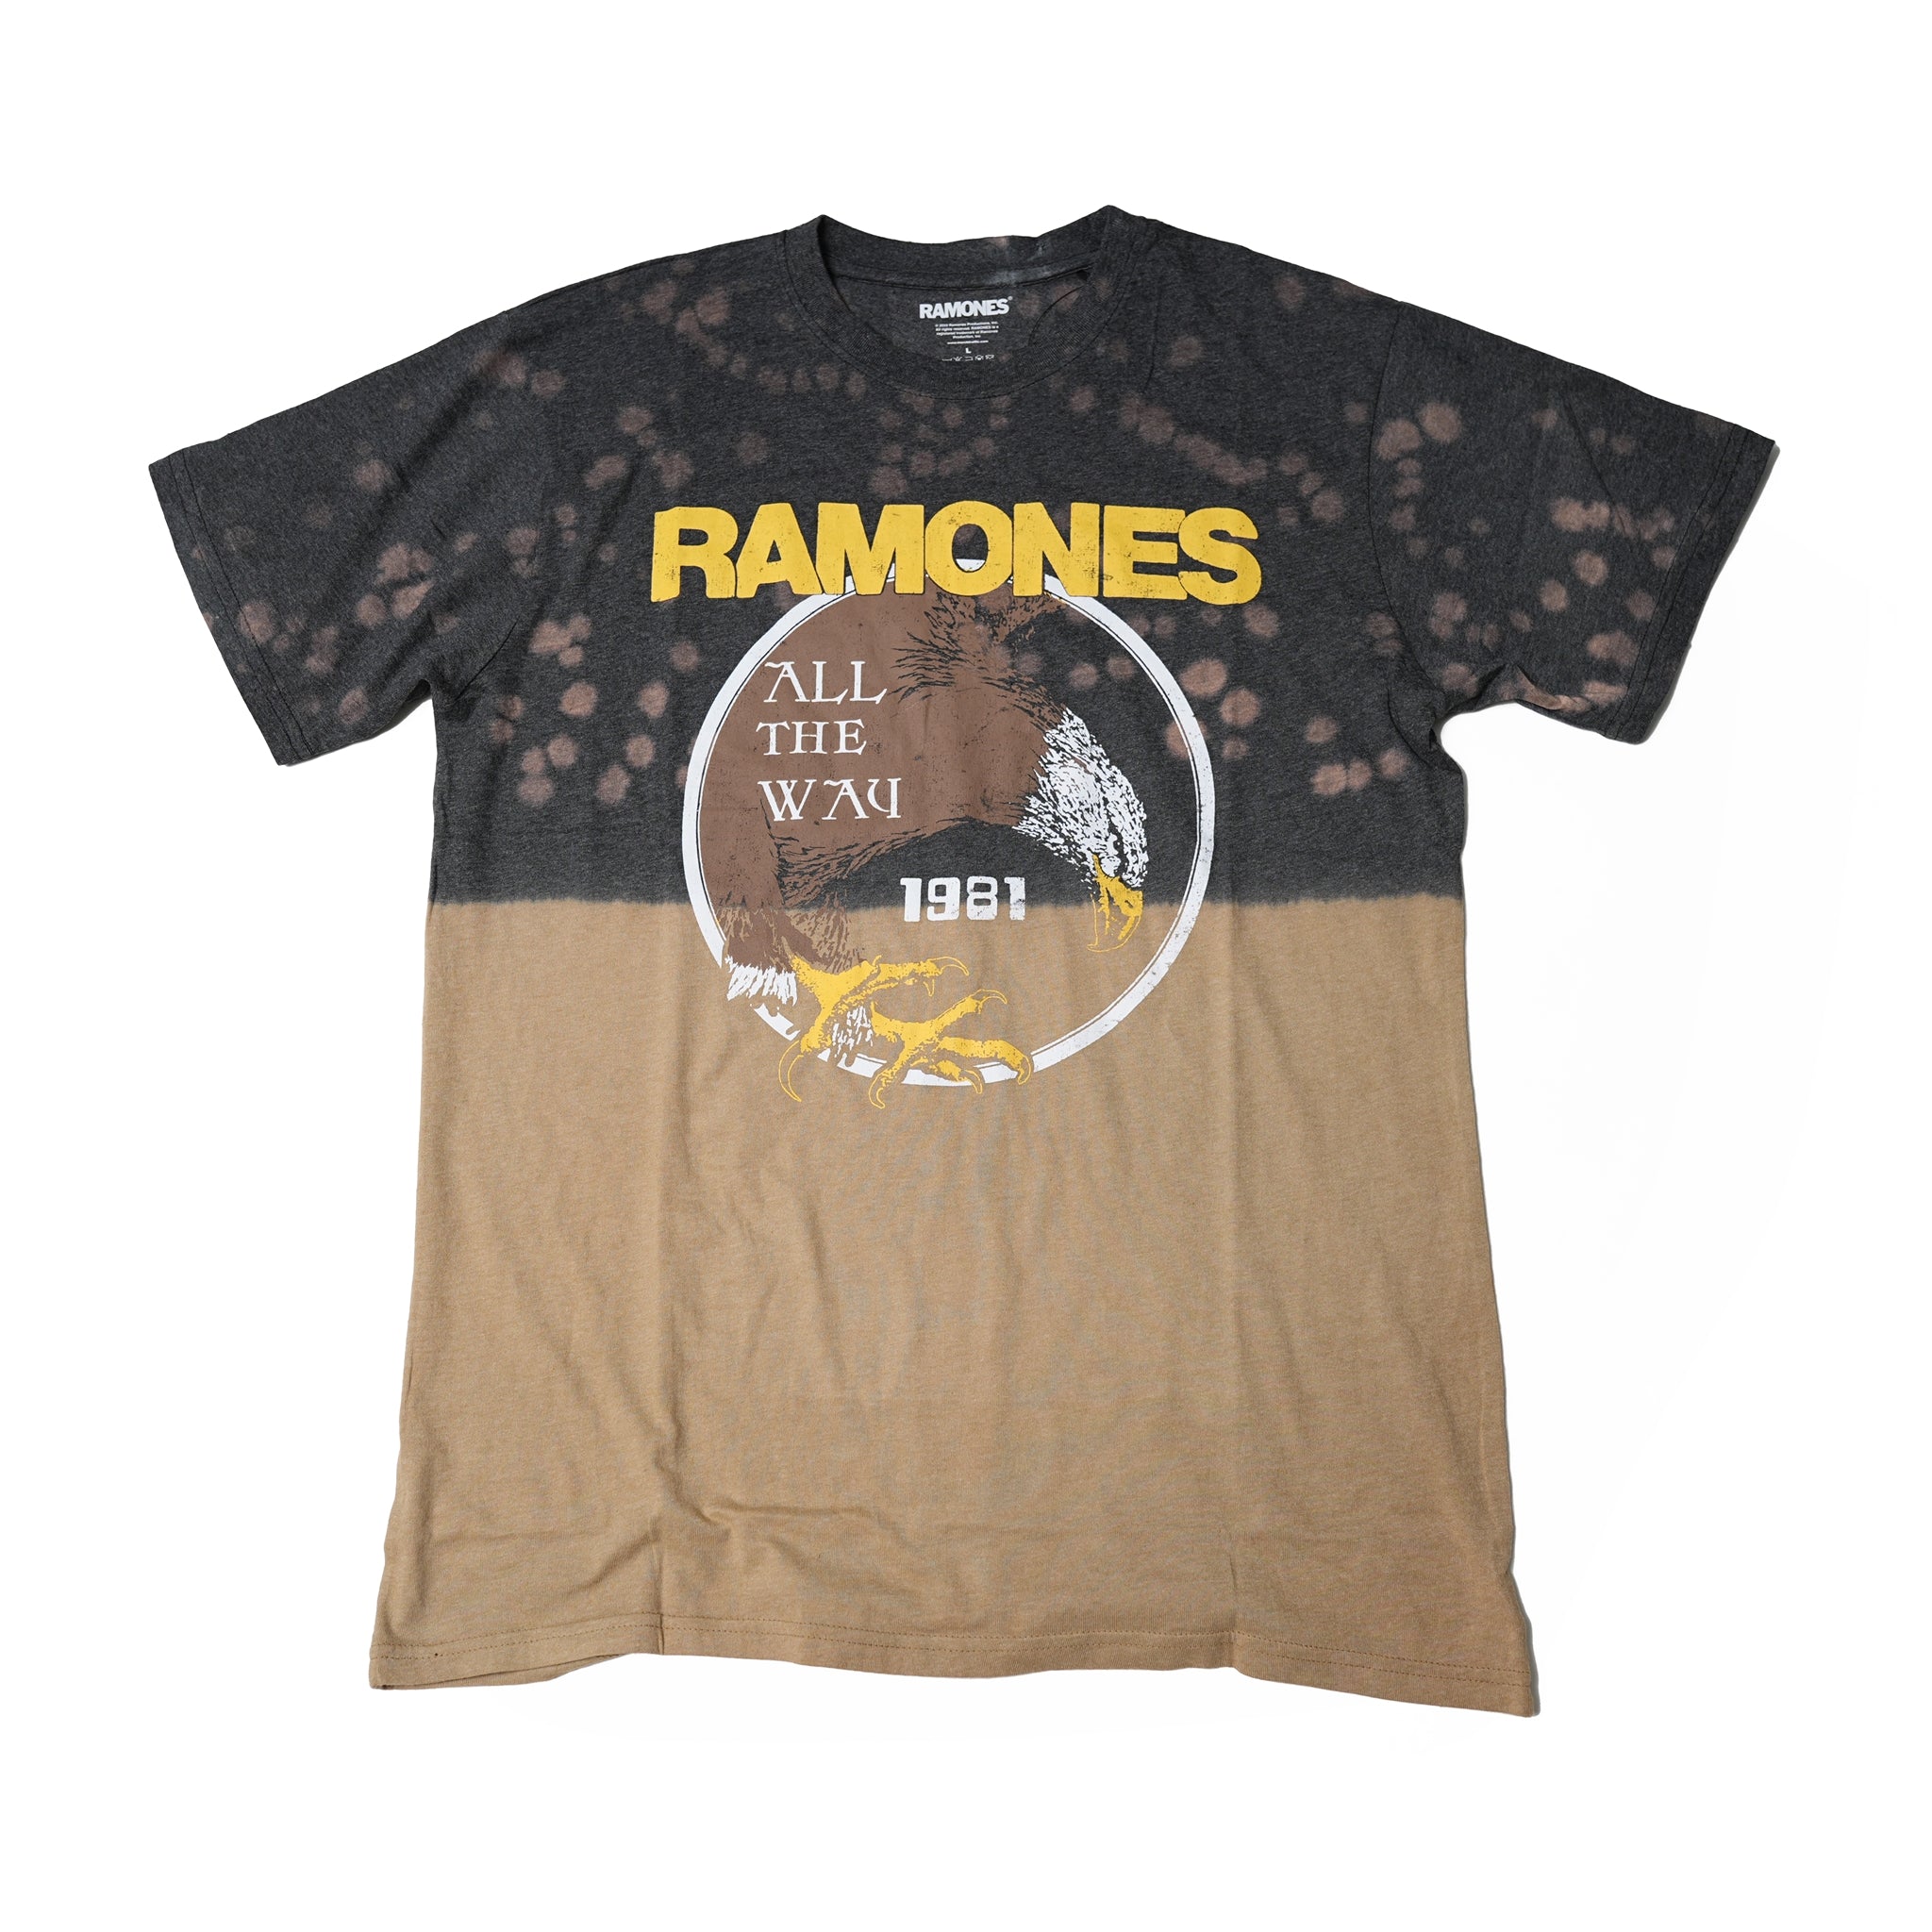 Name:Ramones_All The Way_Uni_BL_Dip-Dye【ROCK OFF】【ネコポス選択可能】